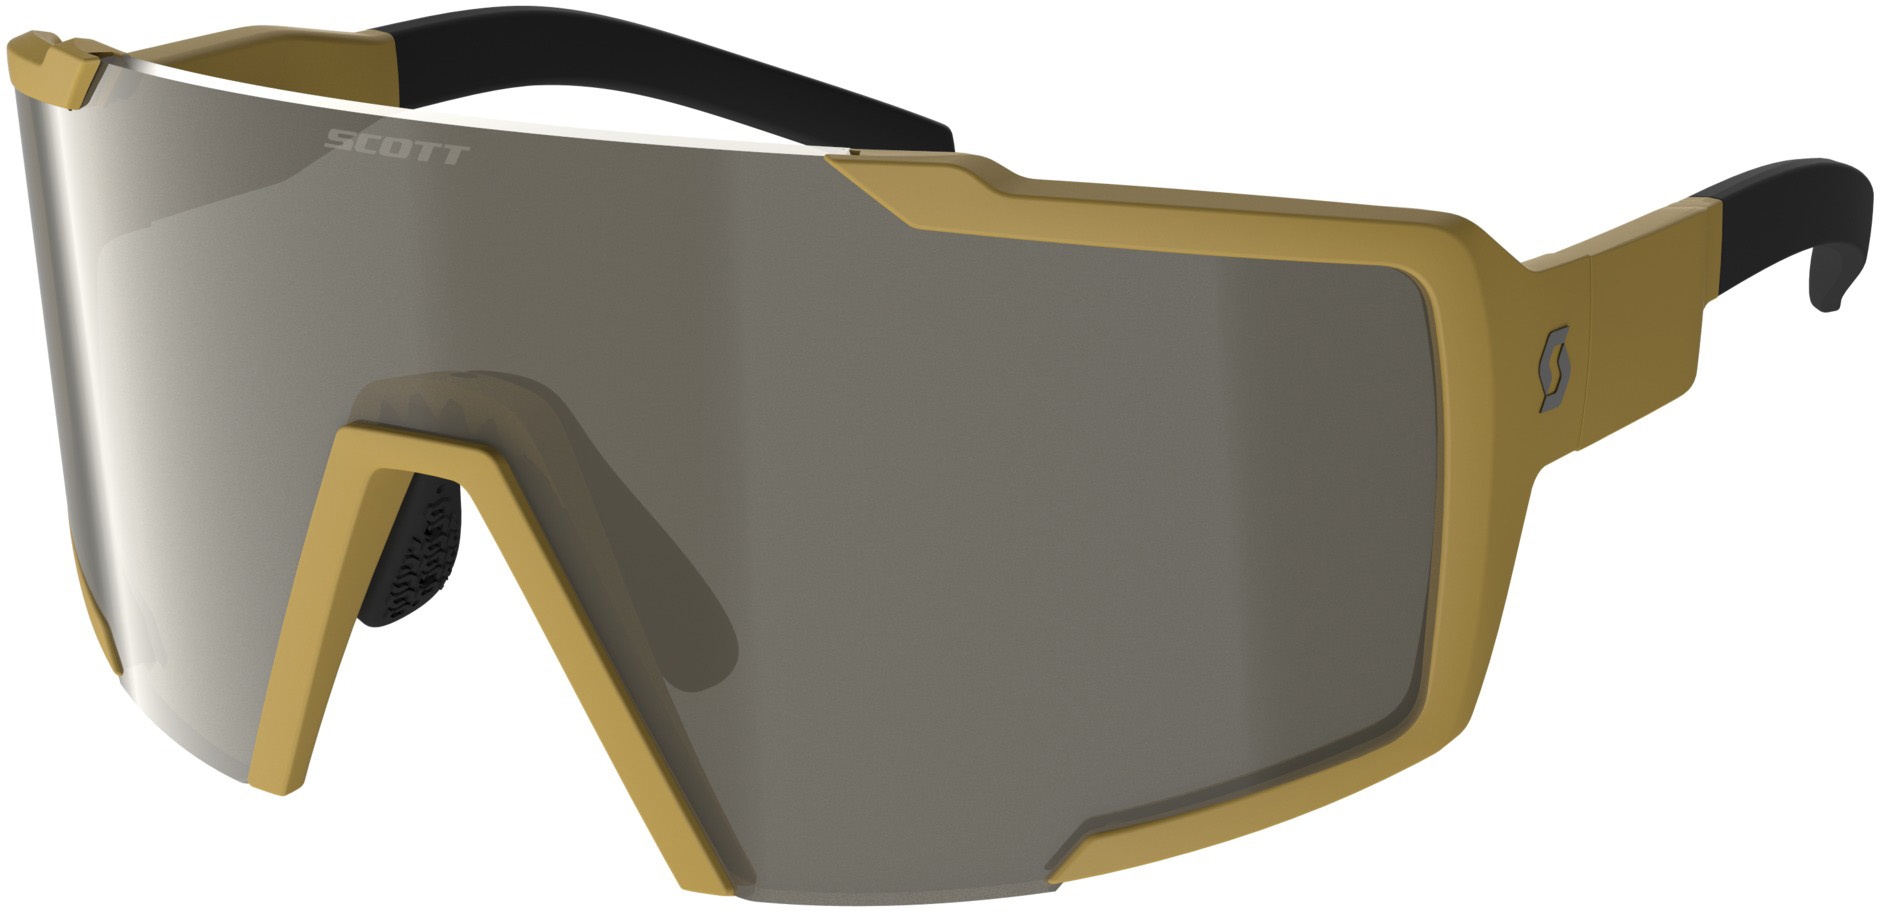 Scott Shield Compact Cykelbrille - Gul/Brun